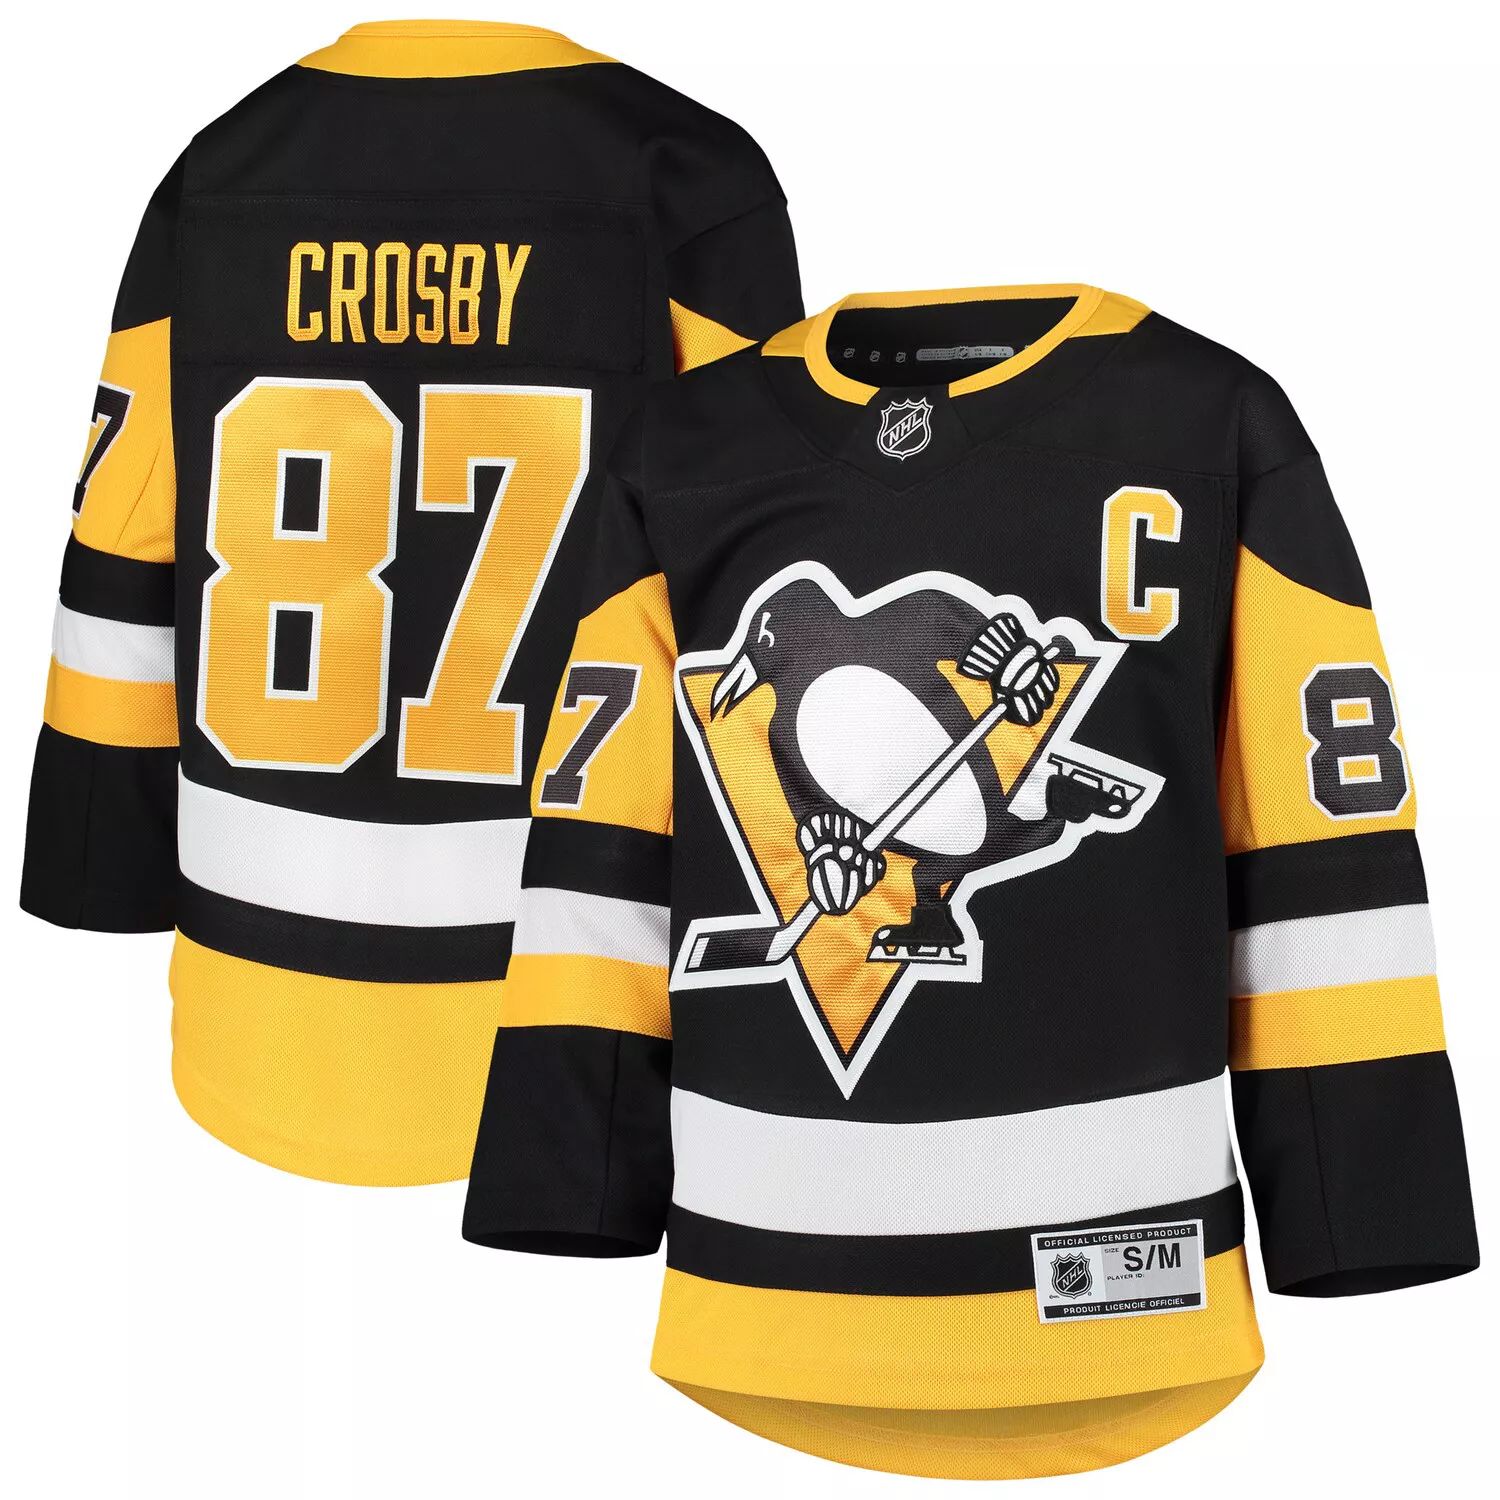 Джерси питтсбург пингвинз. Футболка Питтсбург Пингвинз. "Pittsburgh Penguins детская одежда. Adidas Pittsburgh Penguins.